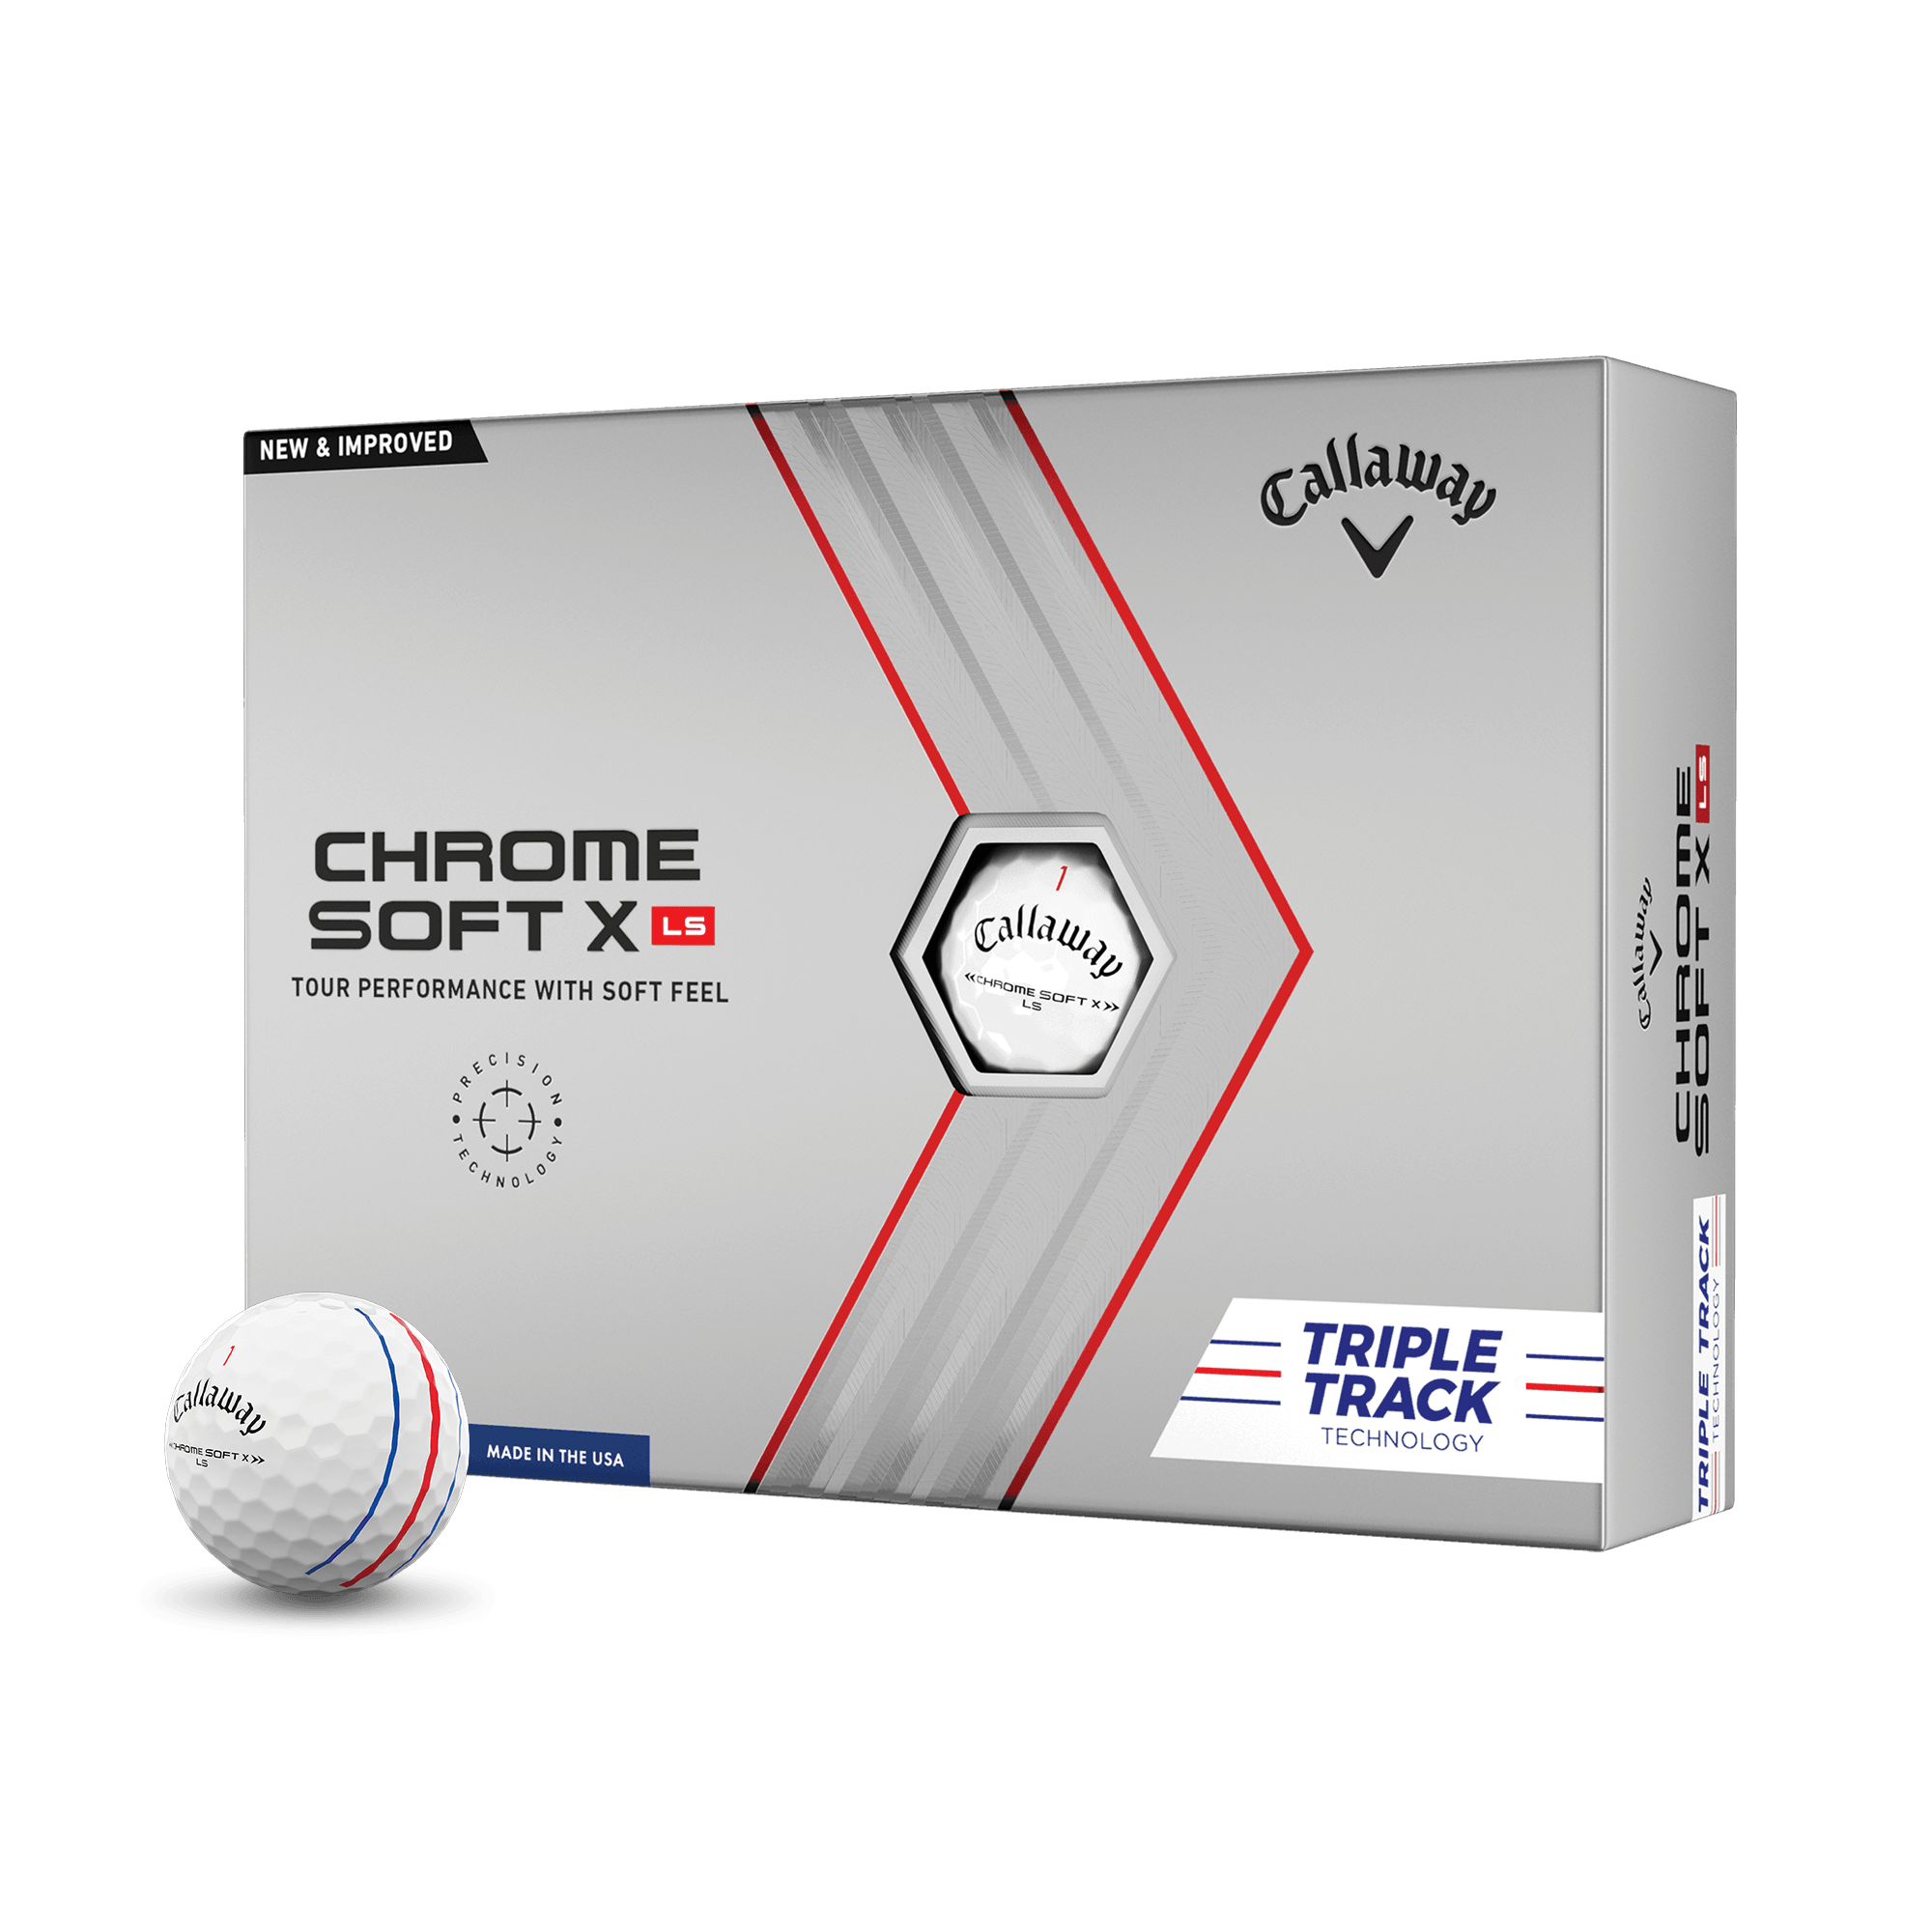 Chrome Soft X LS Triple Track Golf Balls | Callaway Reviews